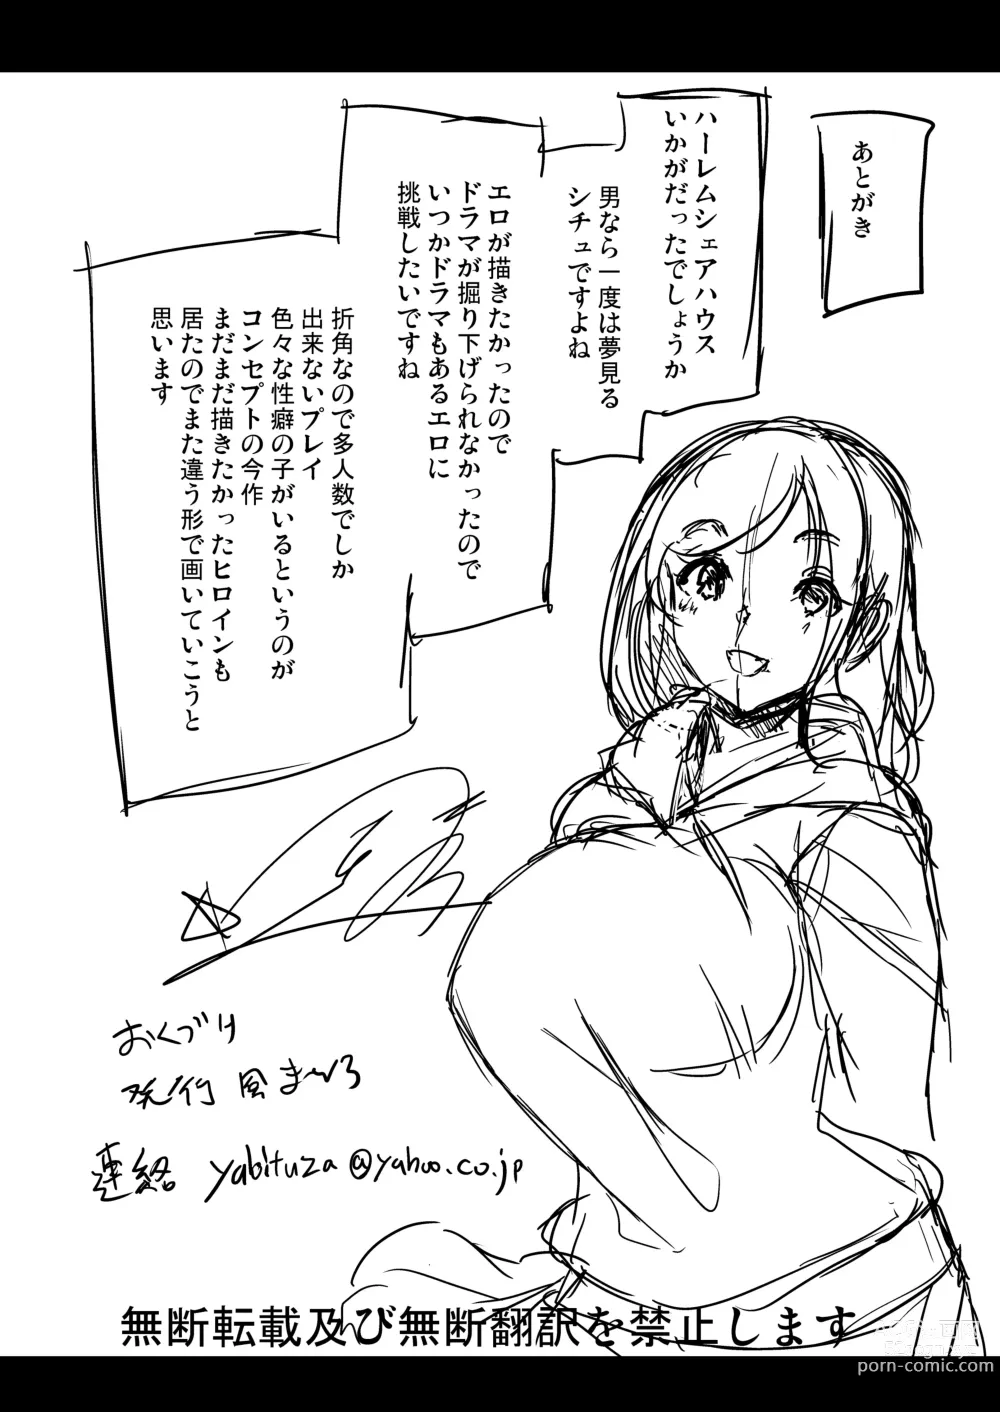 Page 47 of doujinshi ハーレムシェアハウス〜全員中出し姫初め〜